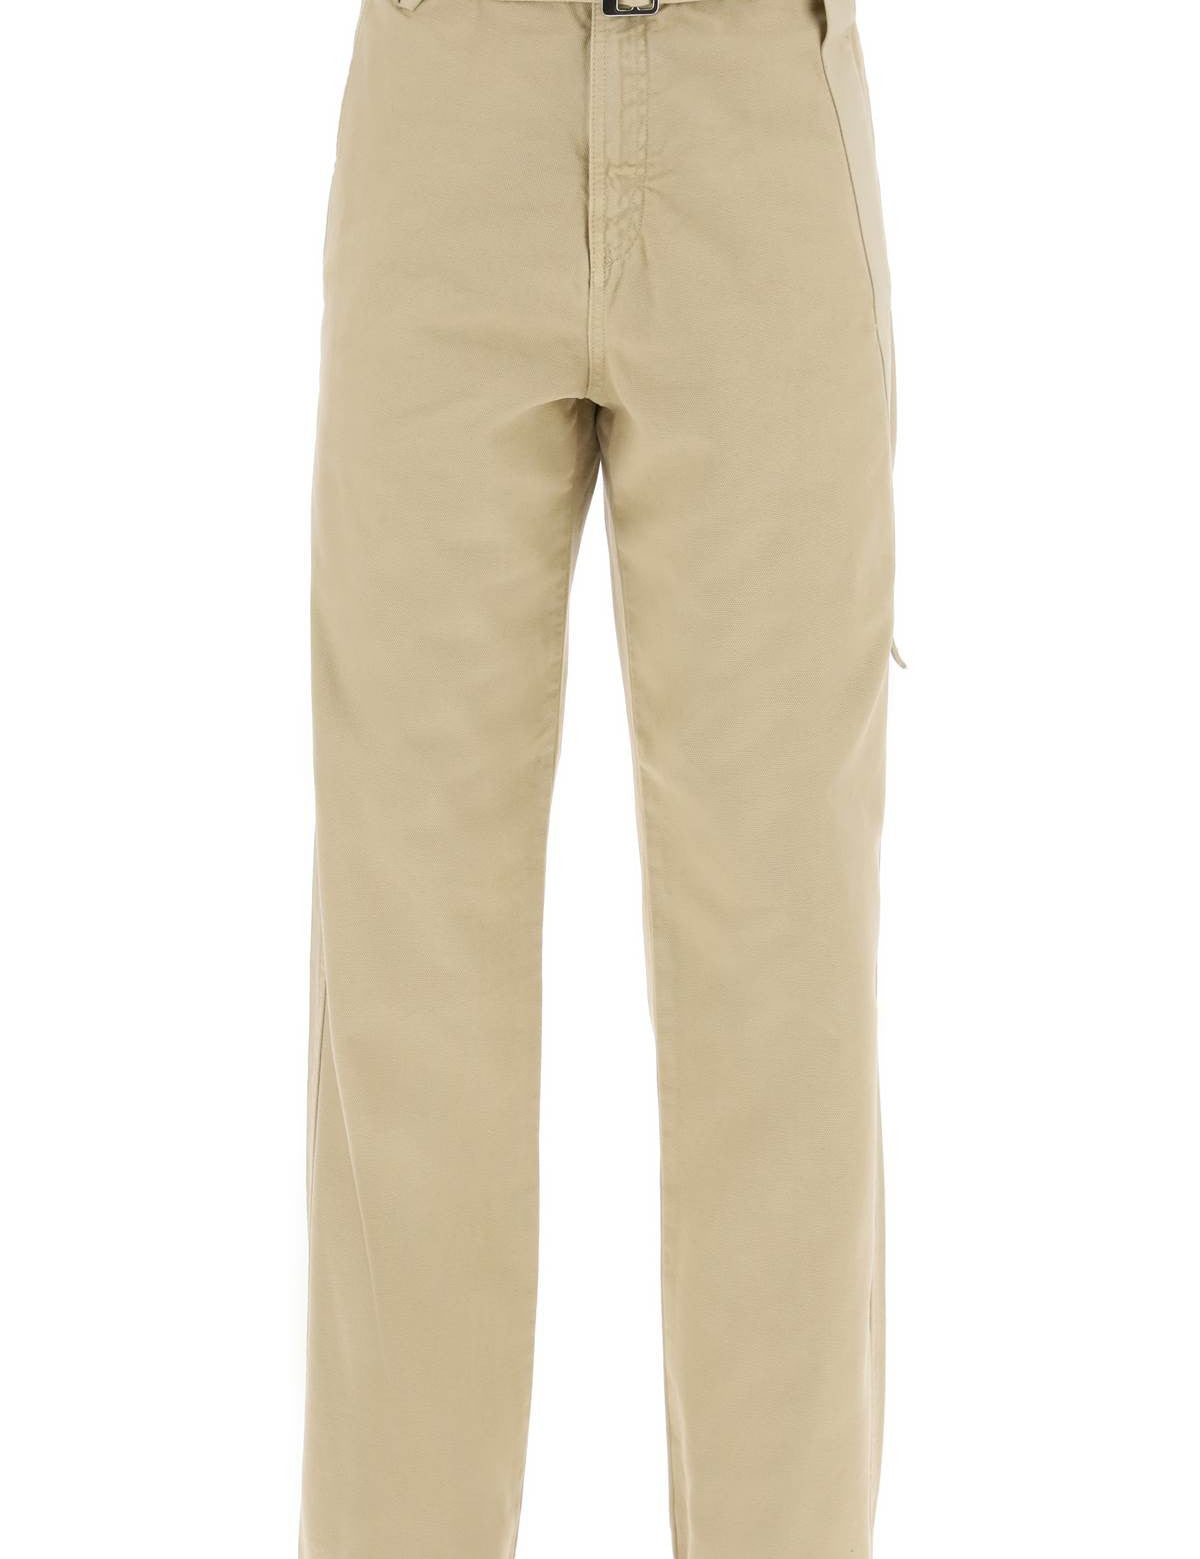 jacquemus-the-brown-pants.jpg